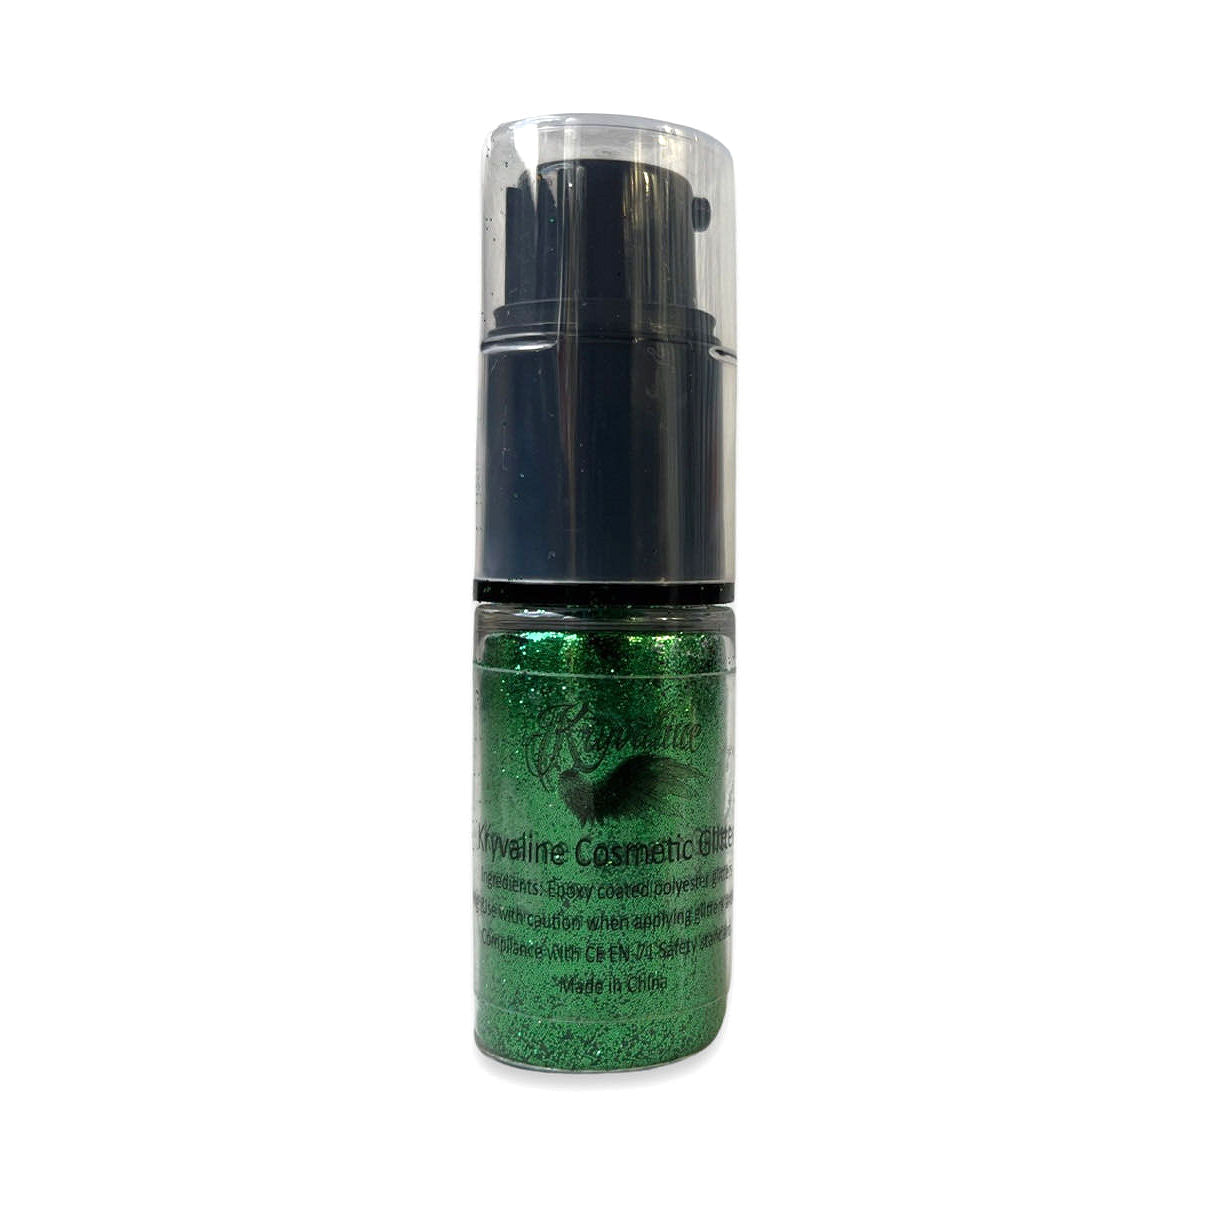 Face Painting Body Glitter Dust Green with Fine Glitters in 15 ml Reusable Spray Bottles - Kryvaline Body Art Makeup | Glitter Tattoos, Face & Body Paint, Design - Kryvaline Body Art Makeup